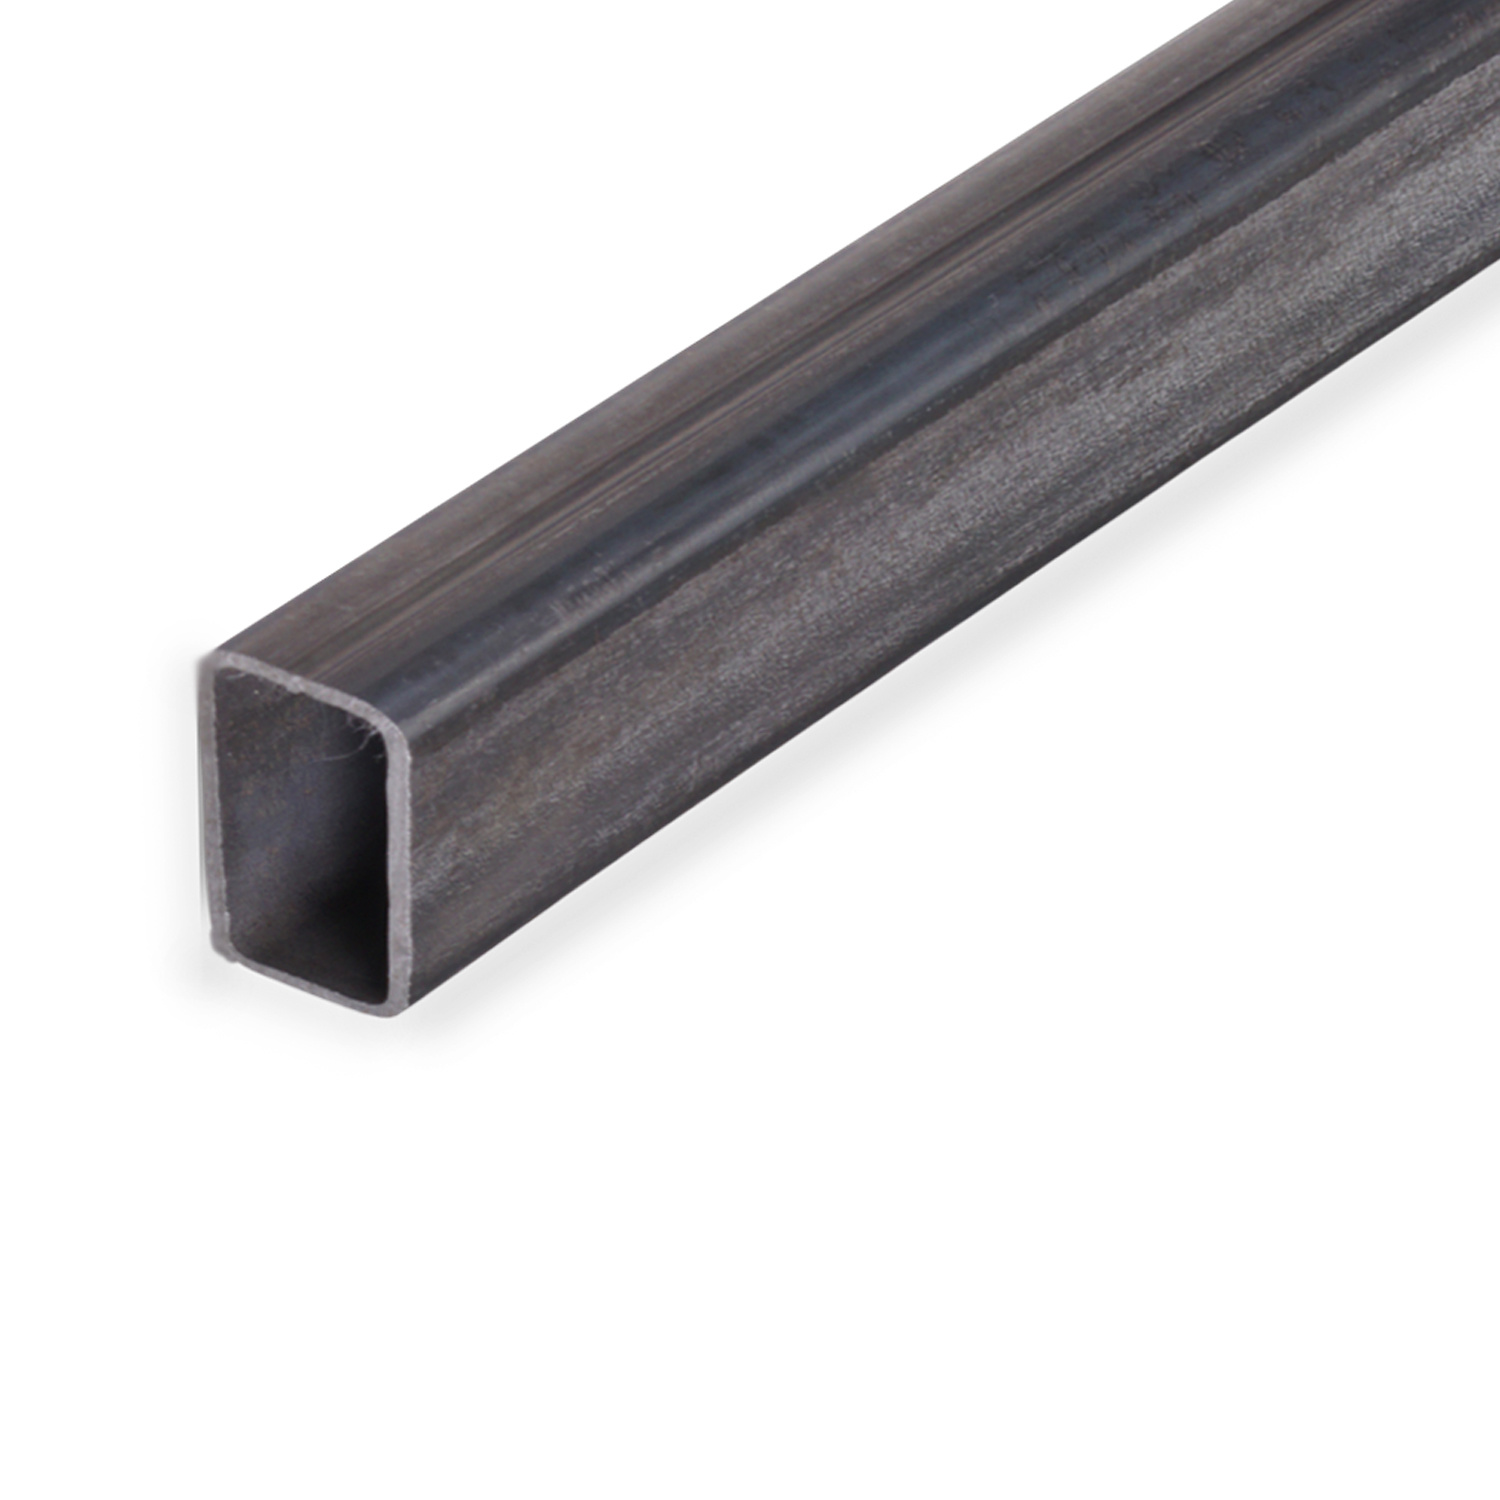  Koker staal - rechthoekige buis kokerprofiel KGV staal - S235JR - 50x40x4 MM